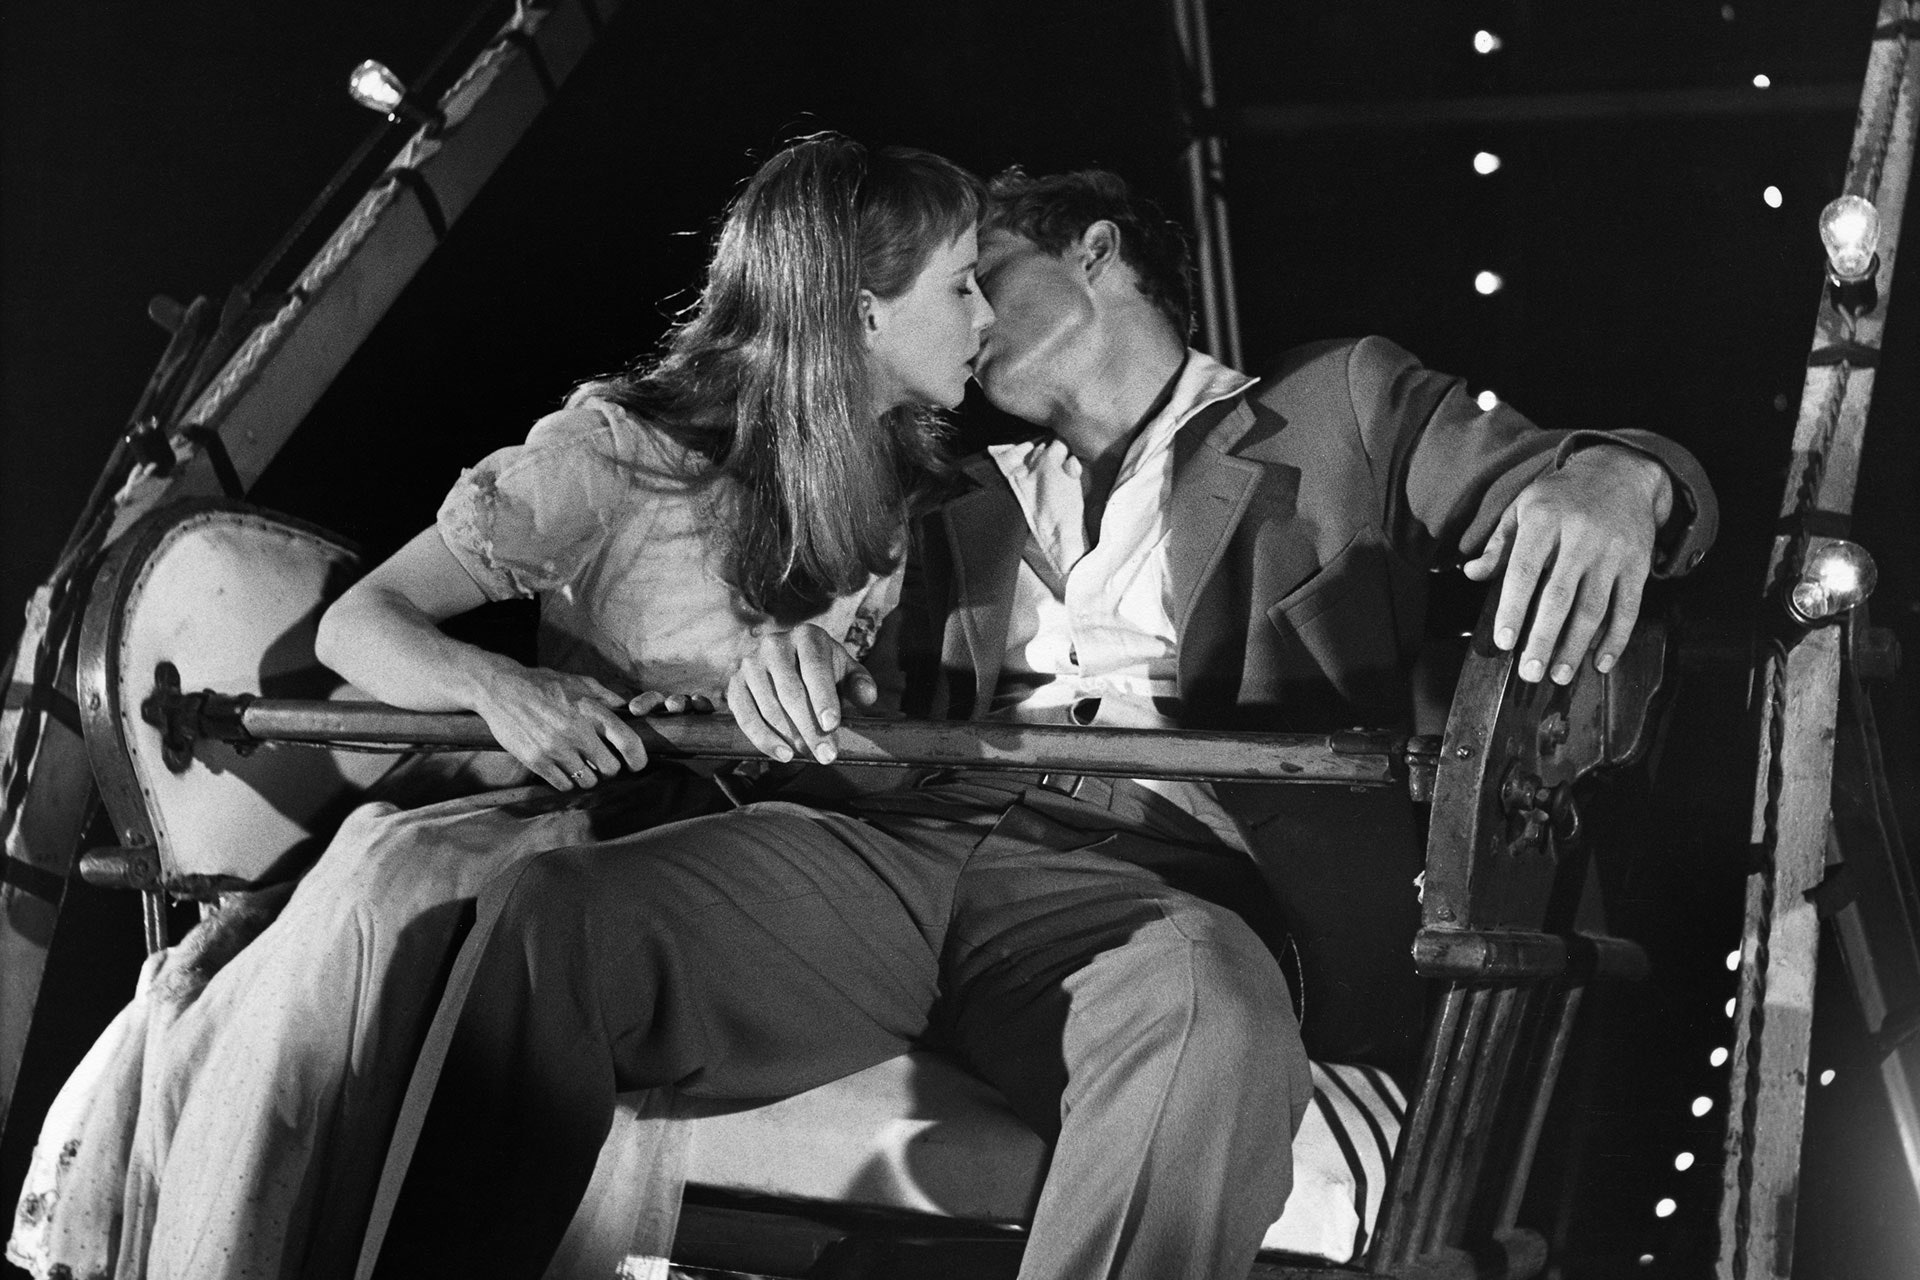 008-Best-Screen-Kisses-Vogueint-July4-Getty-Images.jpg